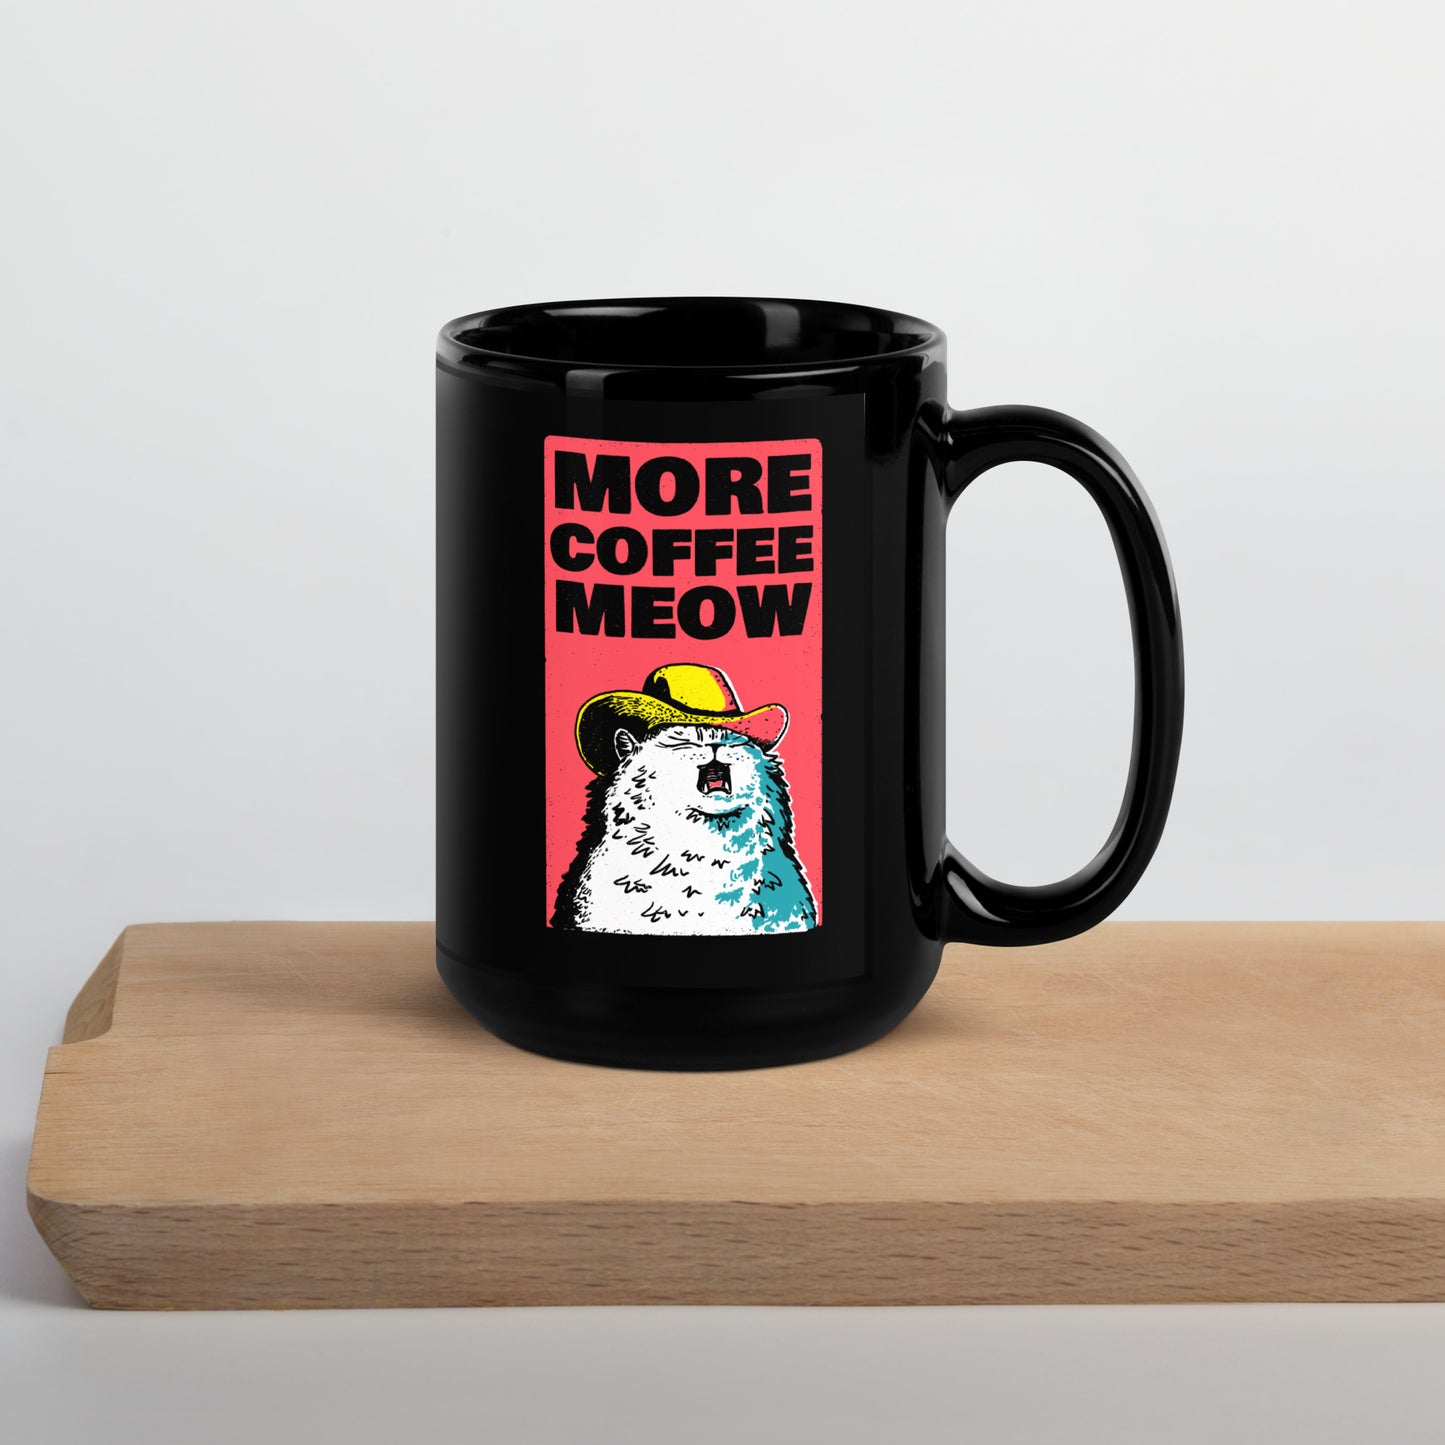 More Coffee Meow - Funny Cat Black Glossy Mug - 15 oz